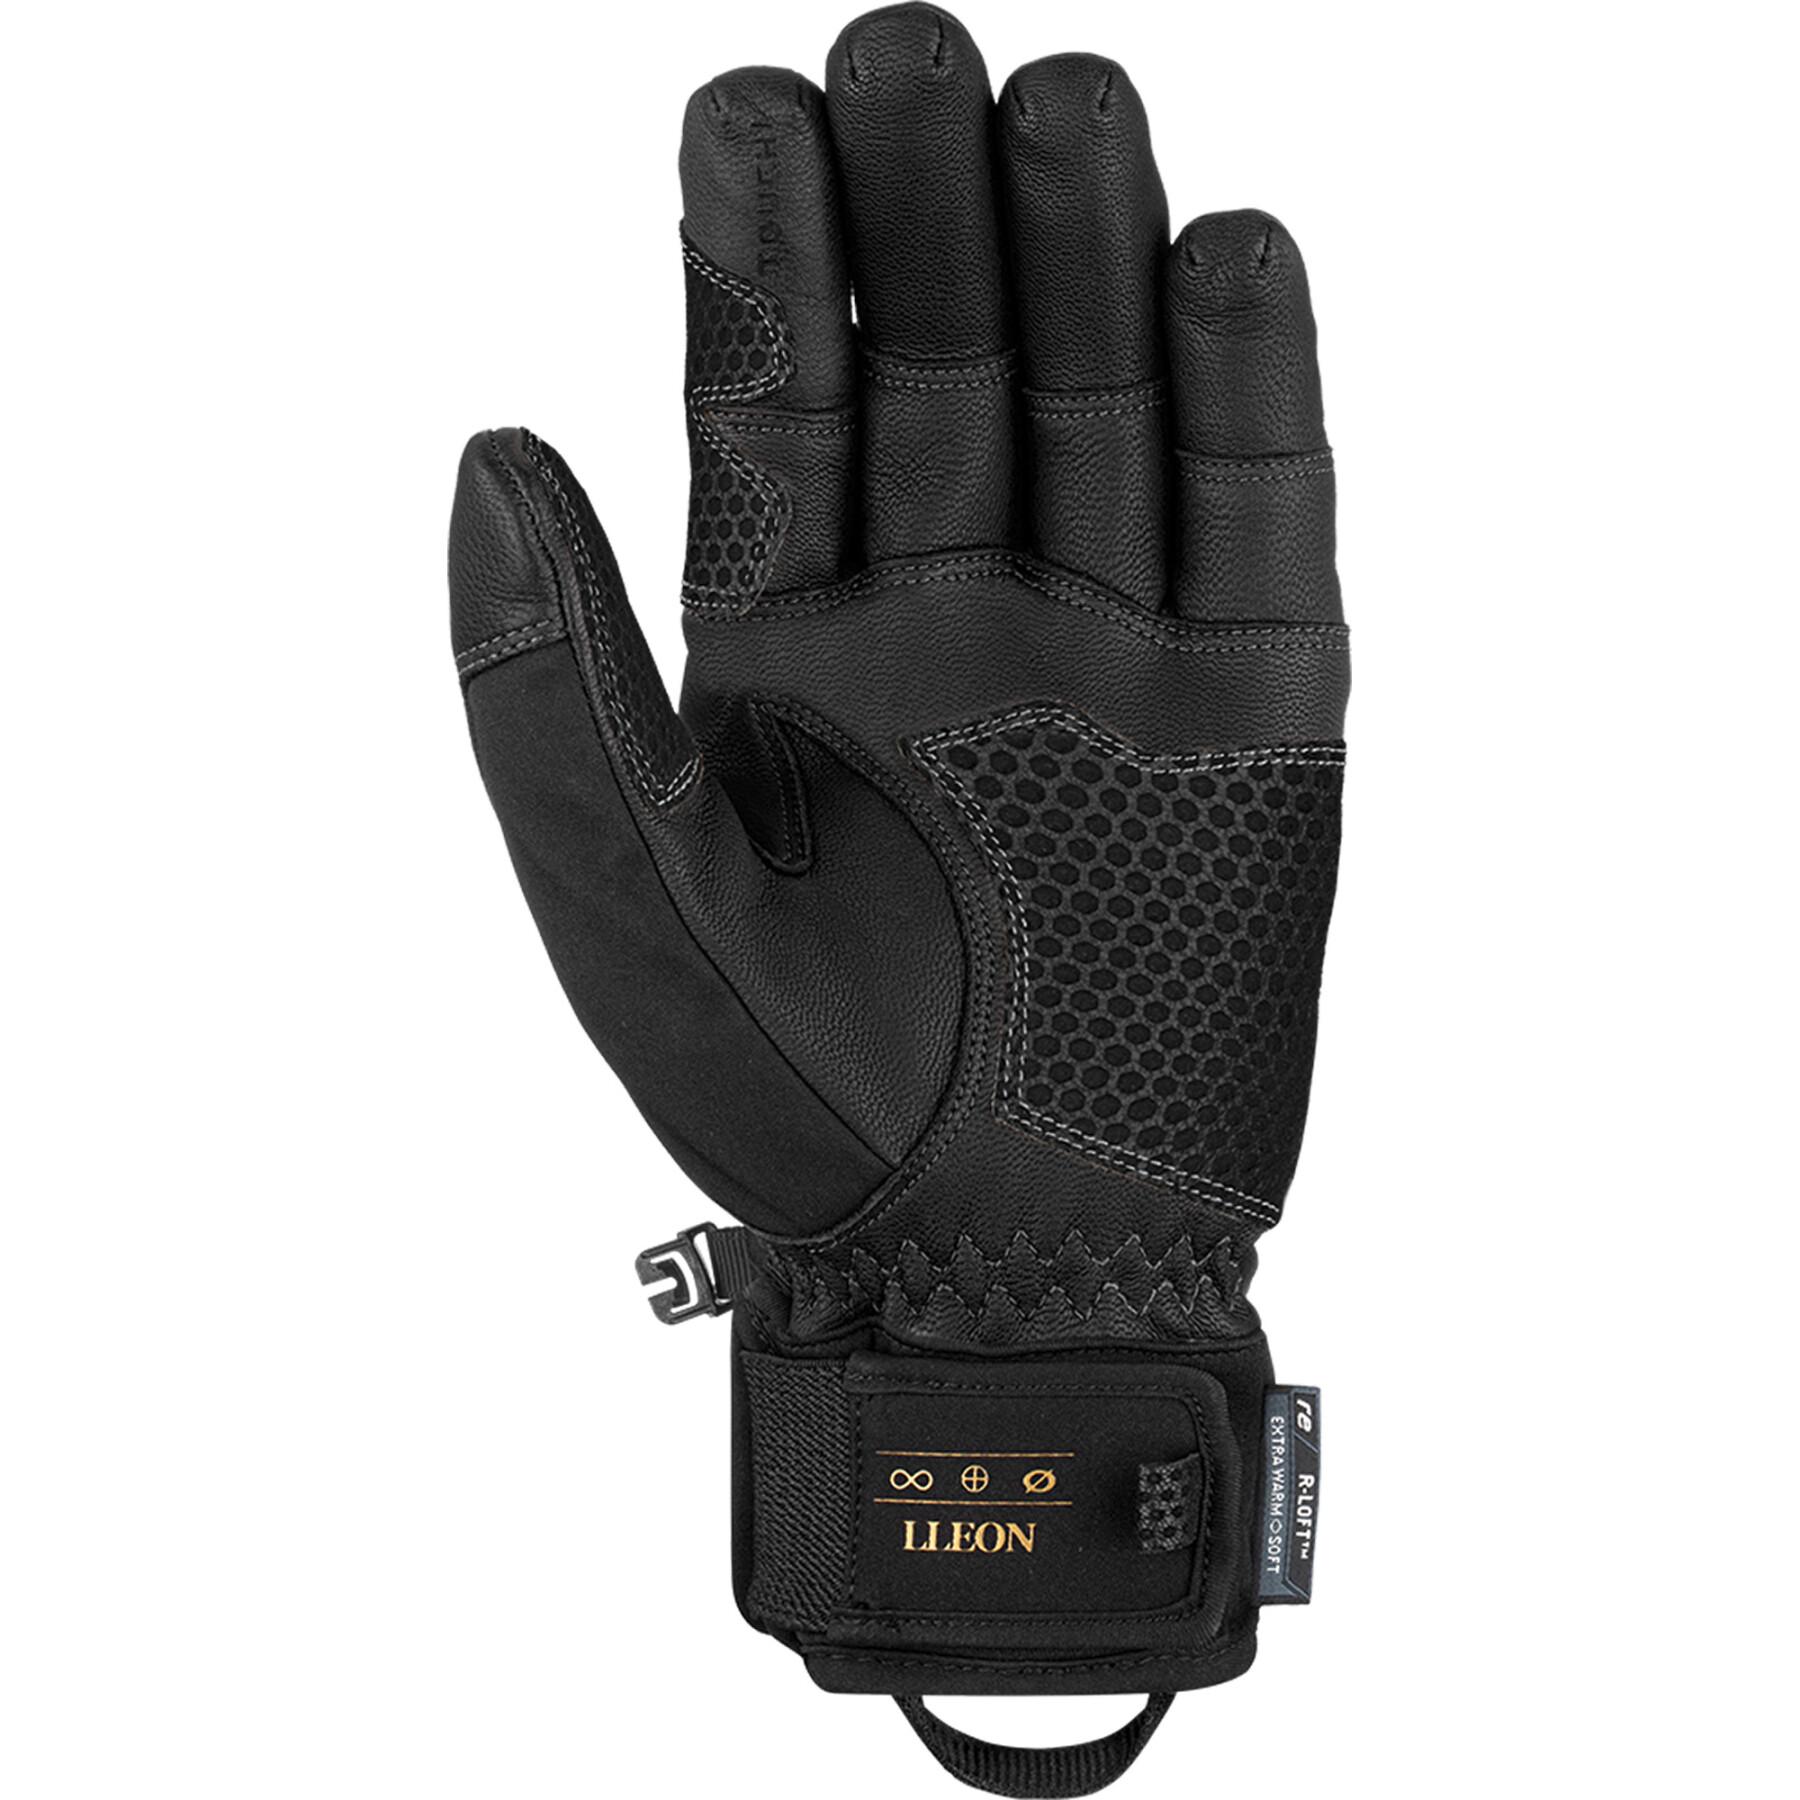 Handschuhe Reusch Lleon R-TEX® - XT - Wintersport - Zubehör Handschuhe